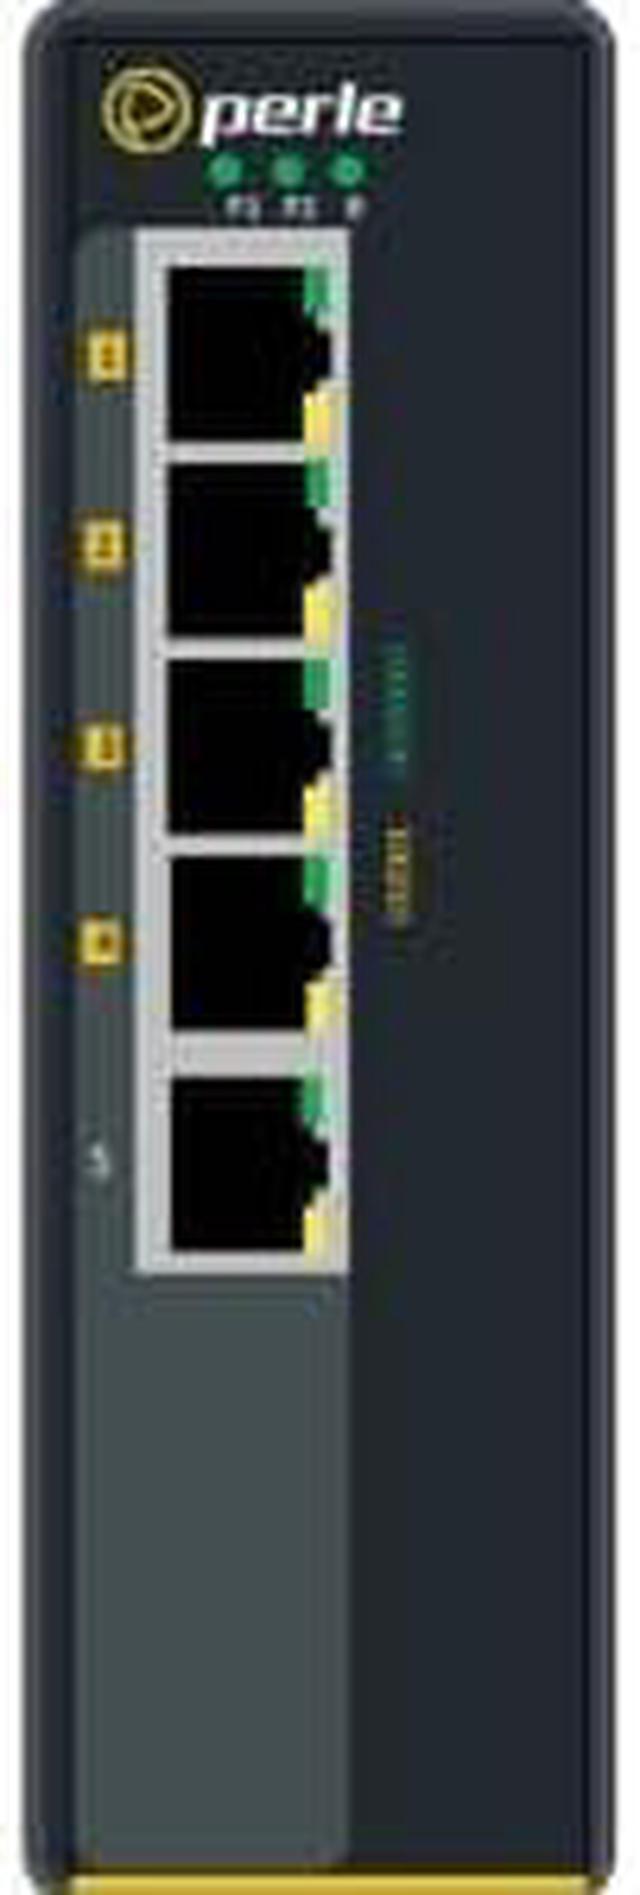 5 Port Industrial Gigabit PoE Switch, IDS-105GPP